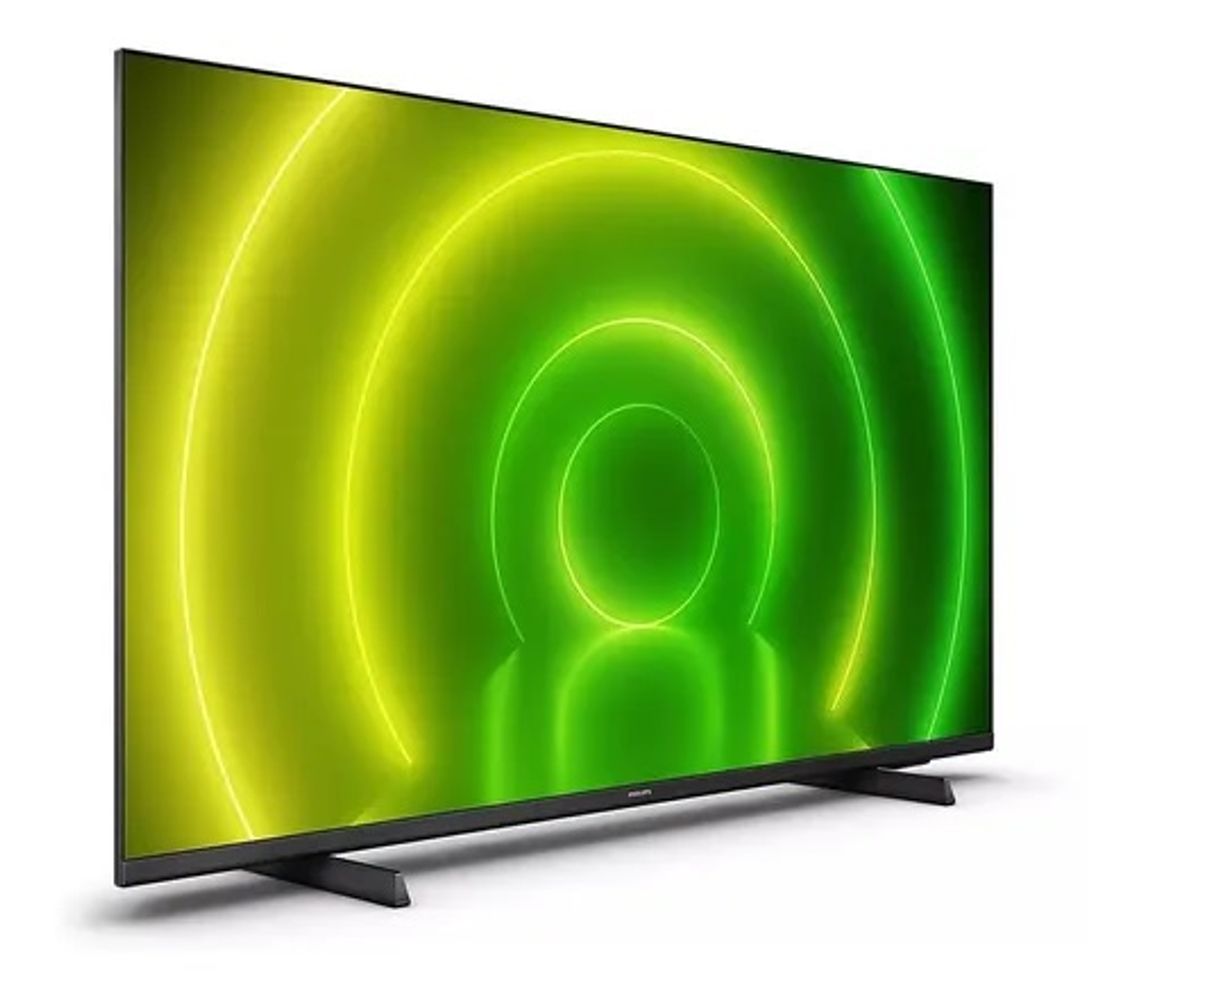 Pantalla Samsung 55 Pulgadas 4K Smart TV LED Serie 7400